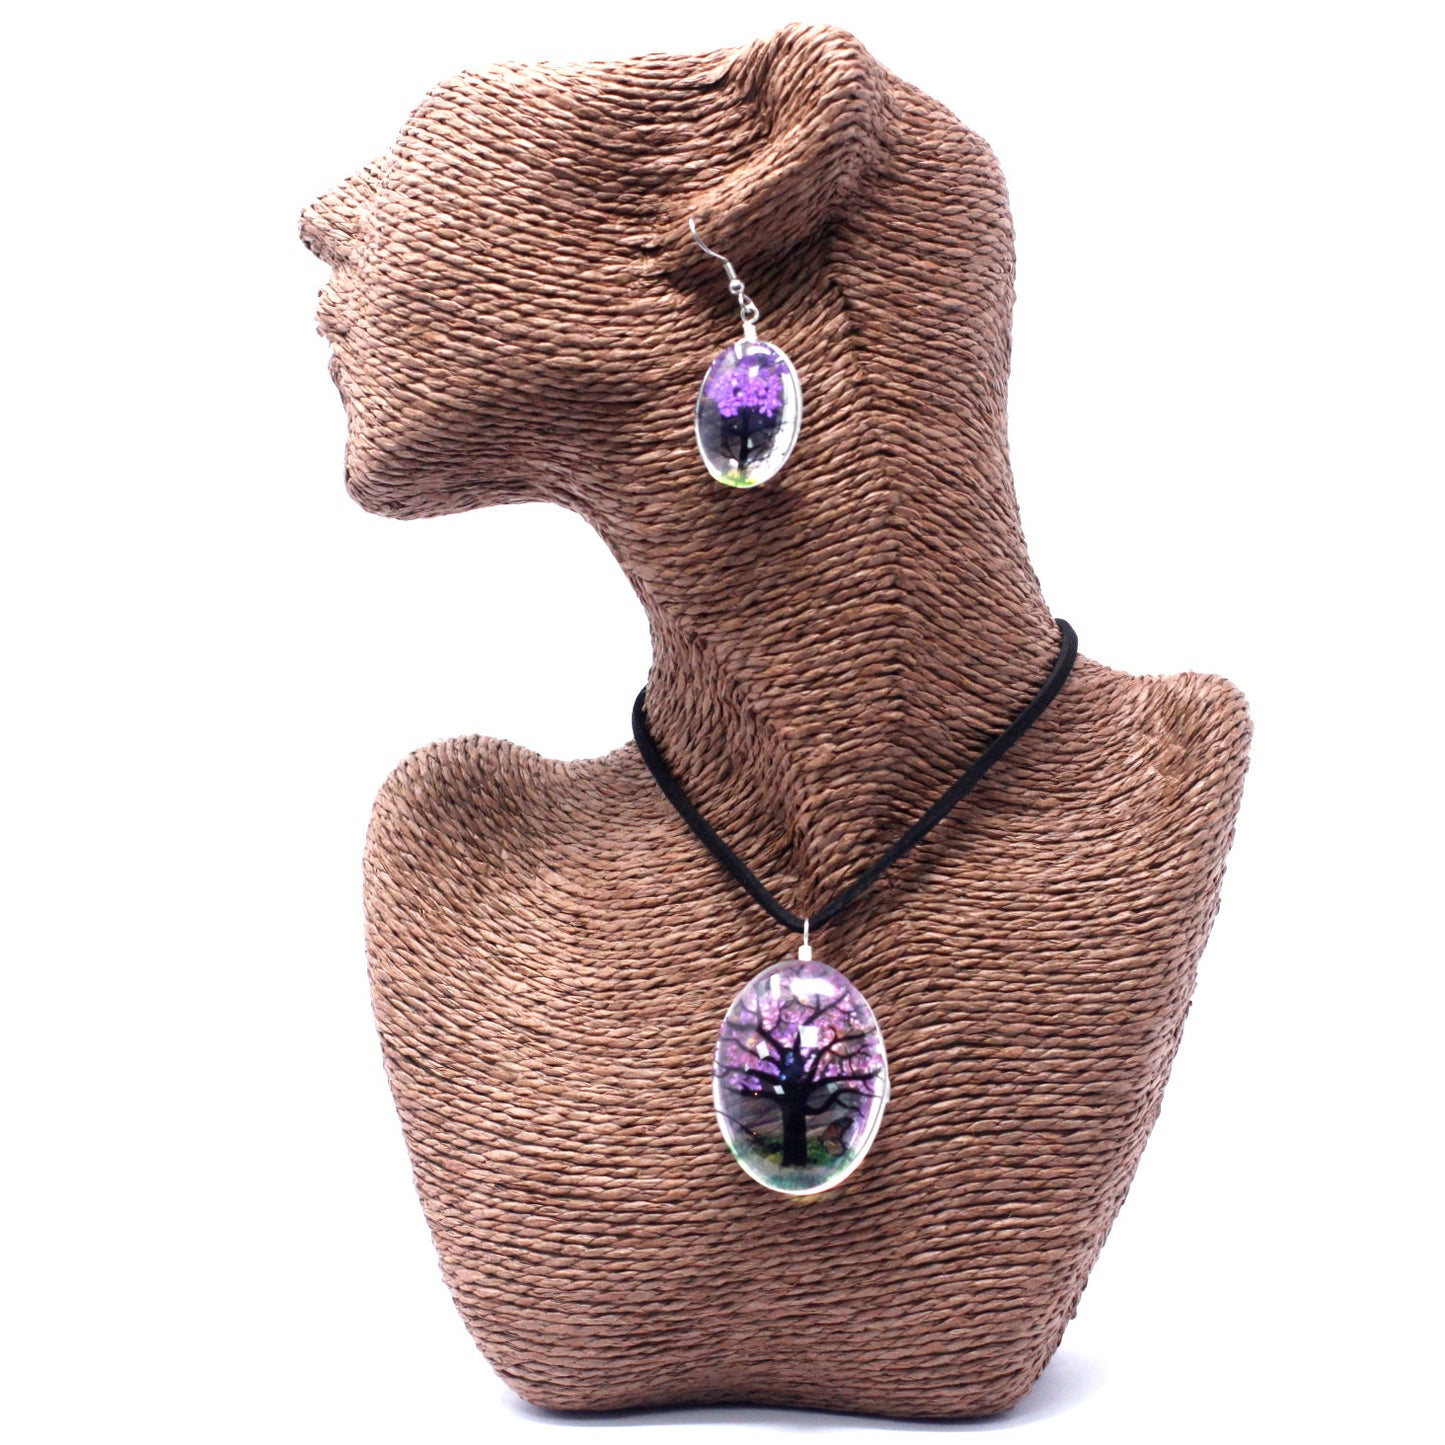 Pressed Flowers Jewelry - Tree of Life Set - Lavender